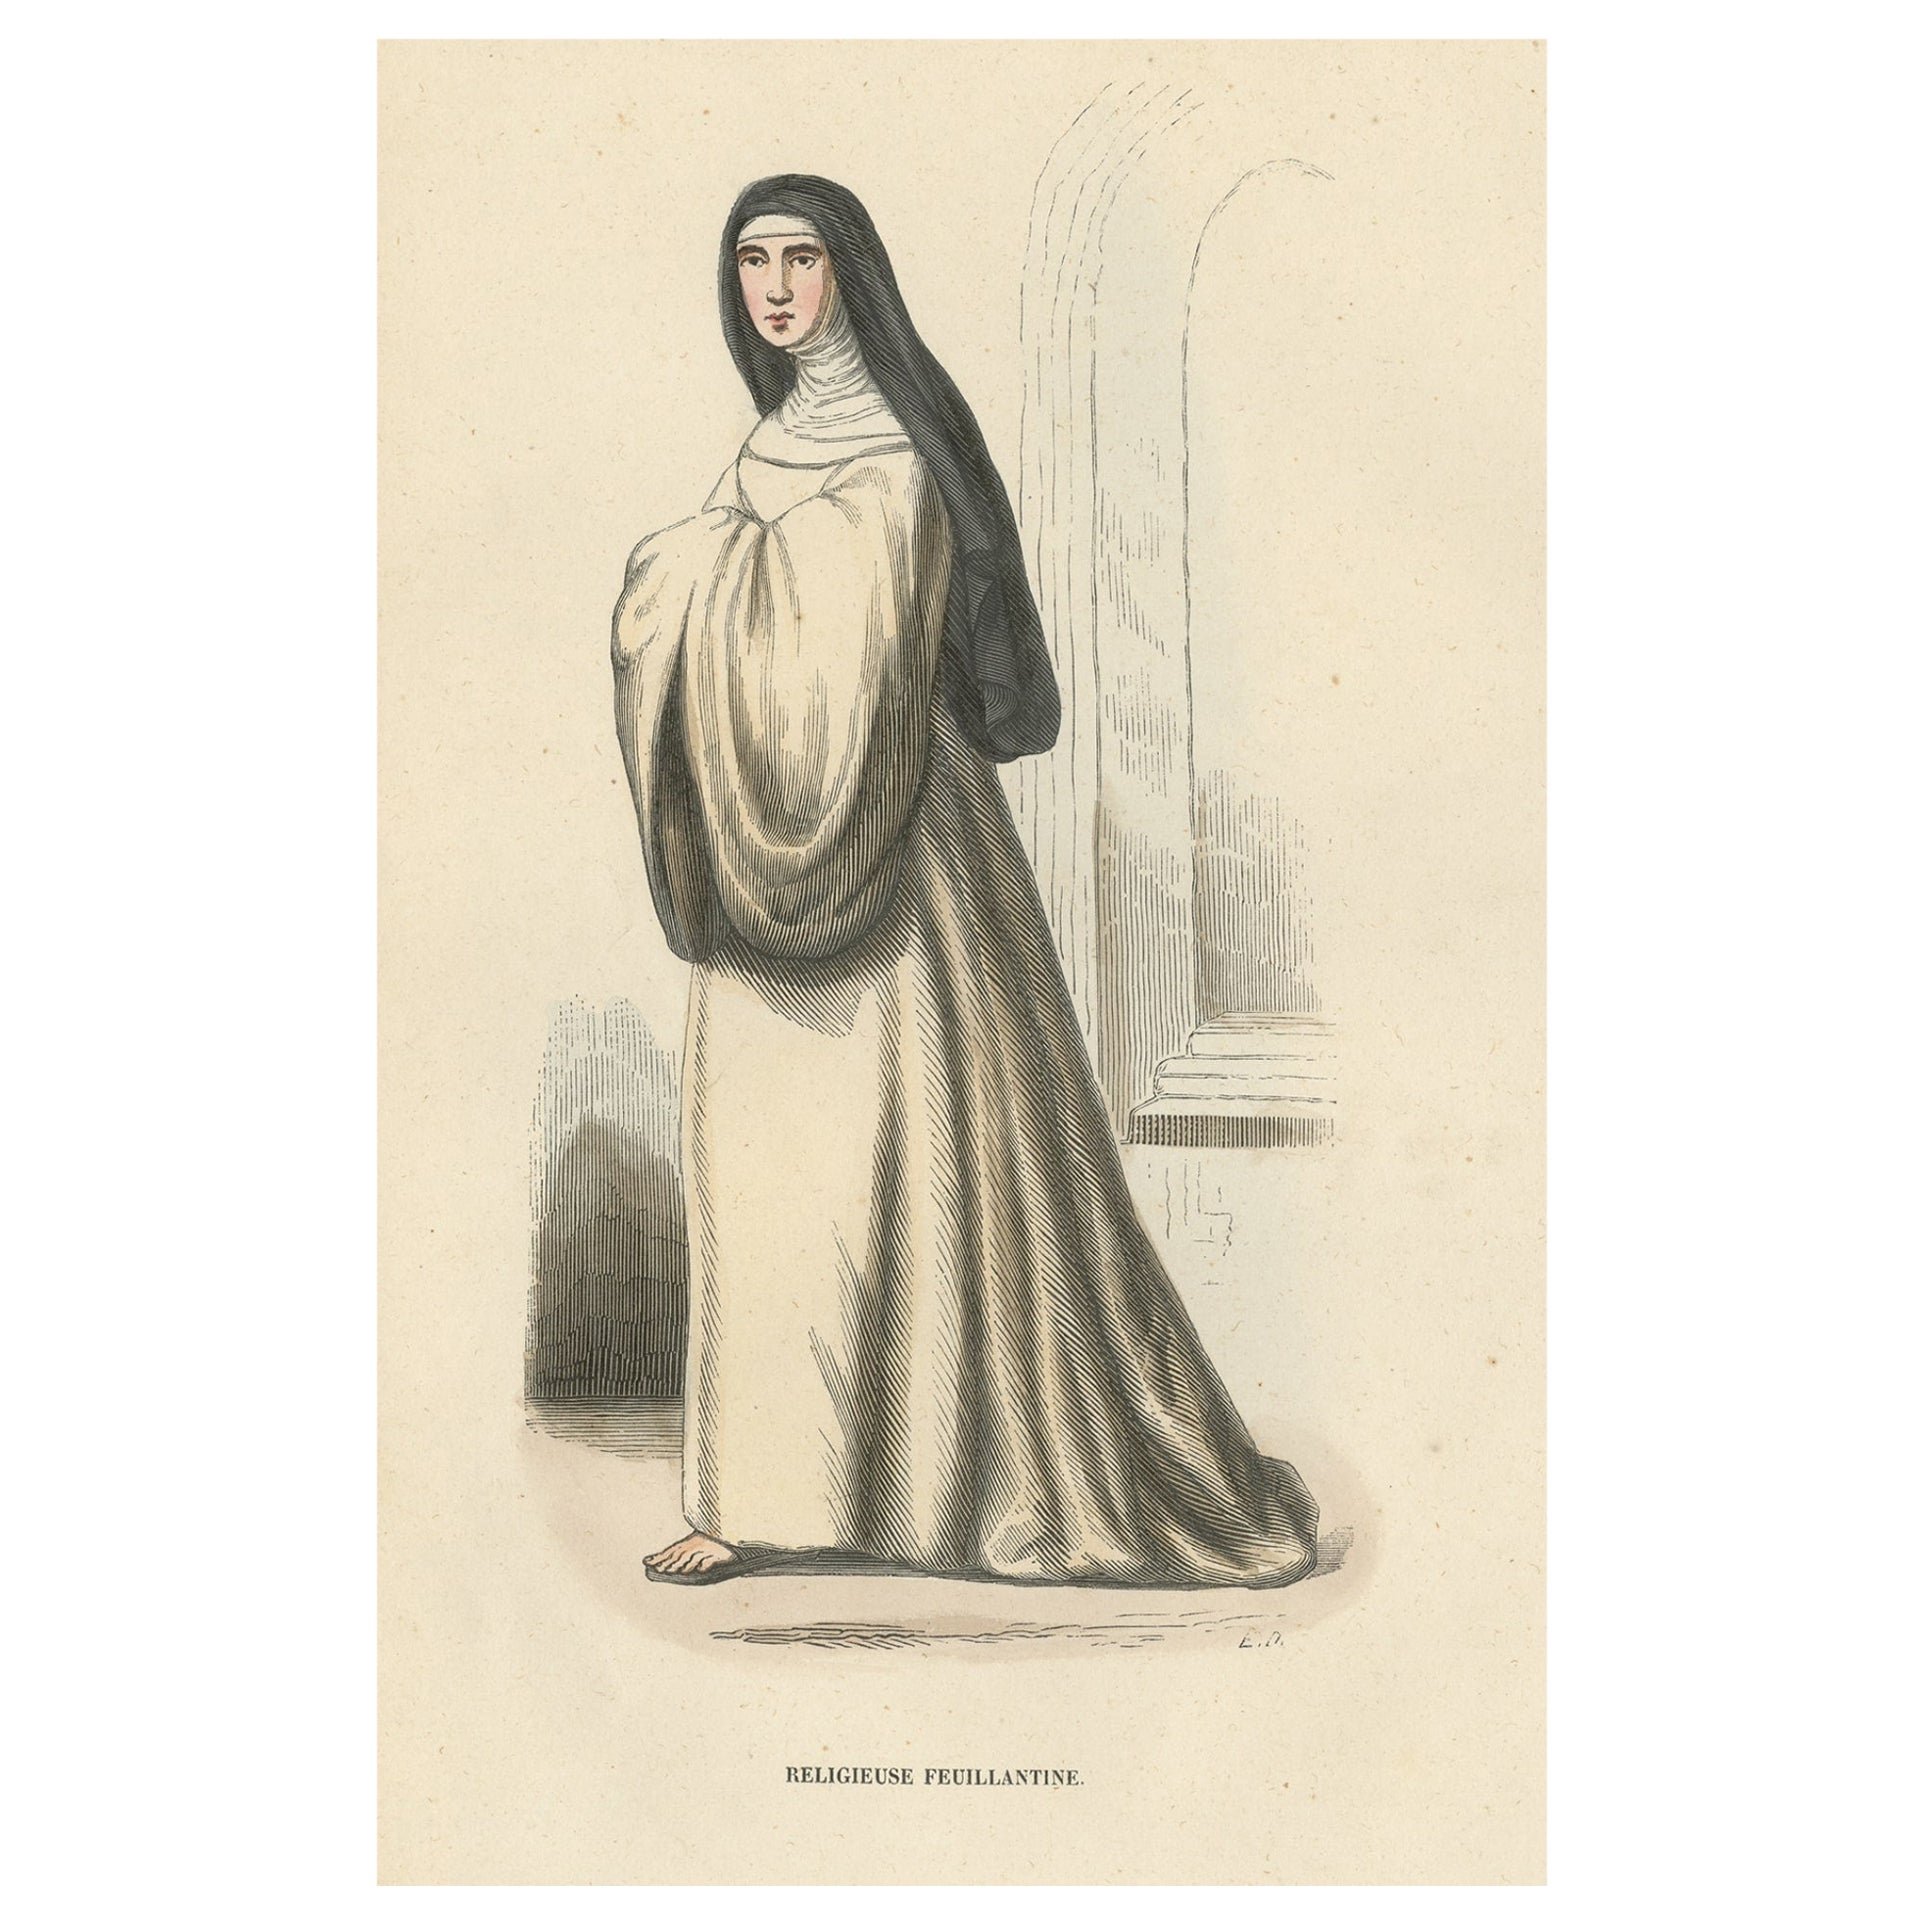  Nun of the Order of Feuillantines, un ecclésiastique catholique, 1845